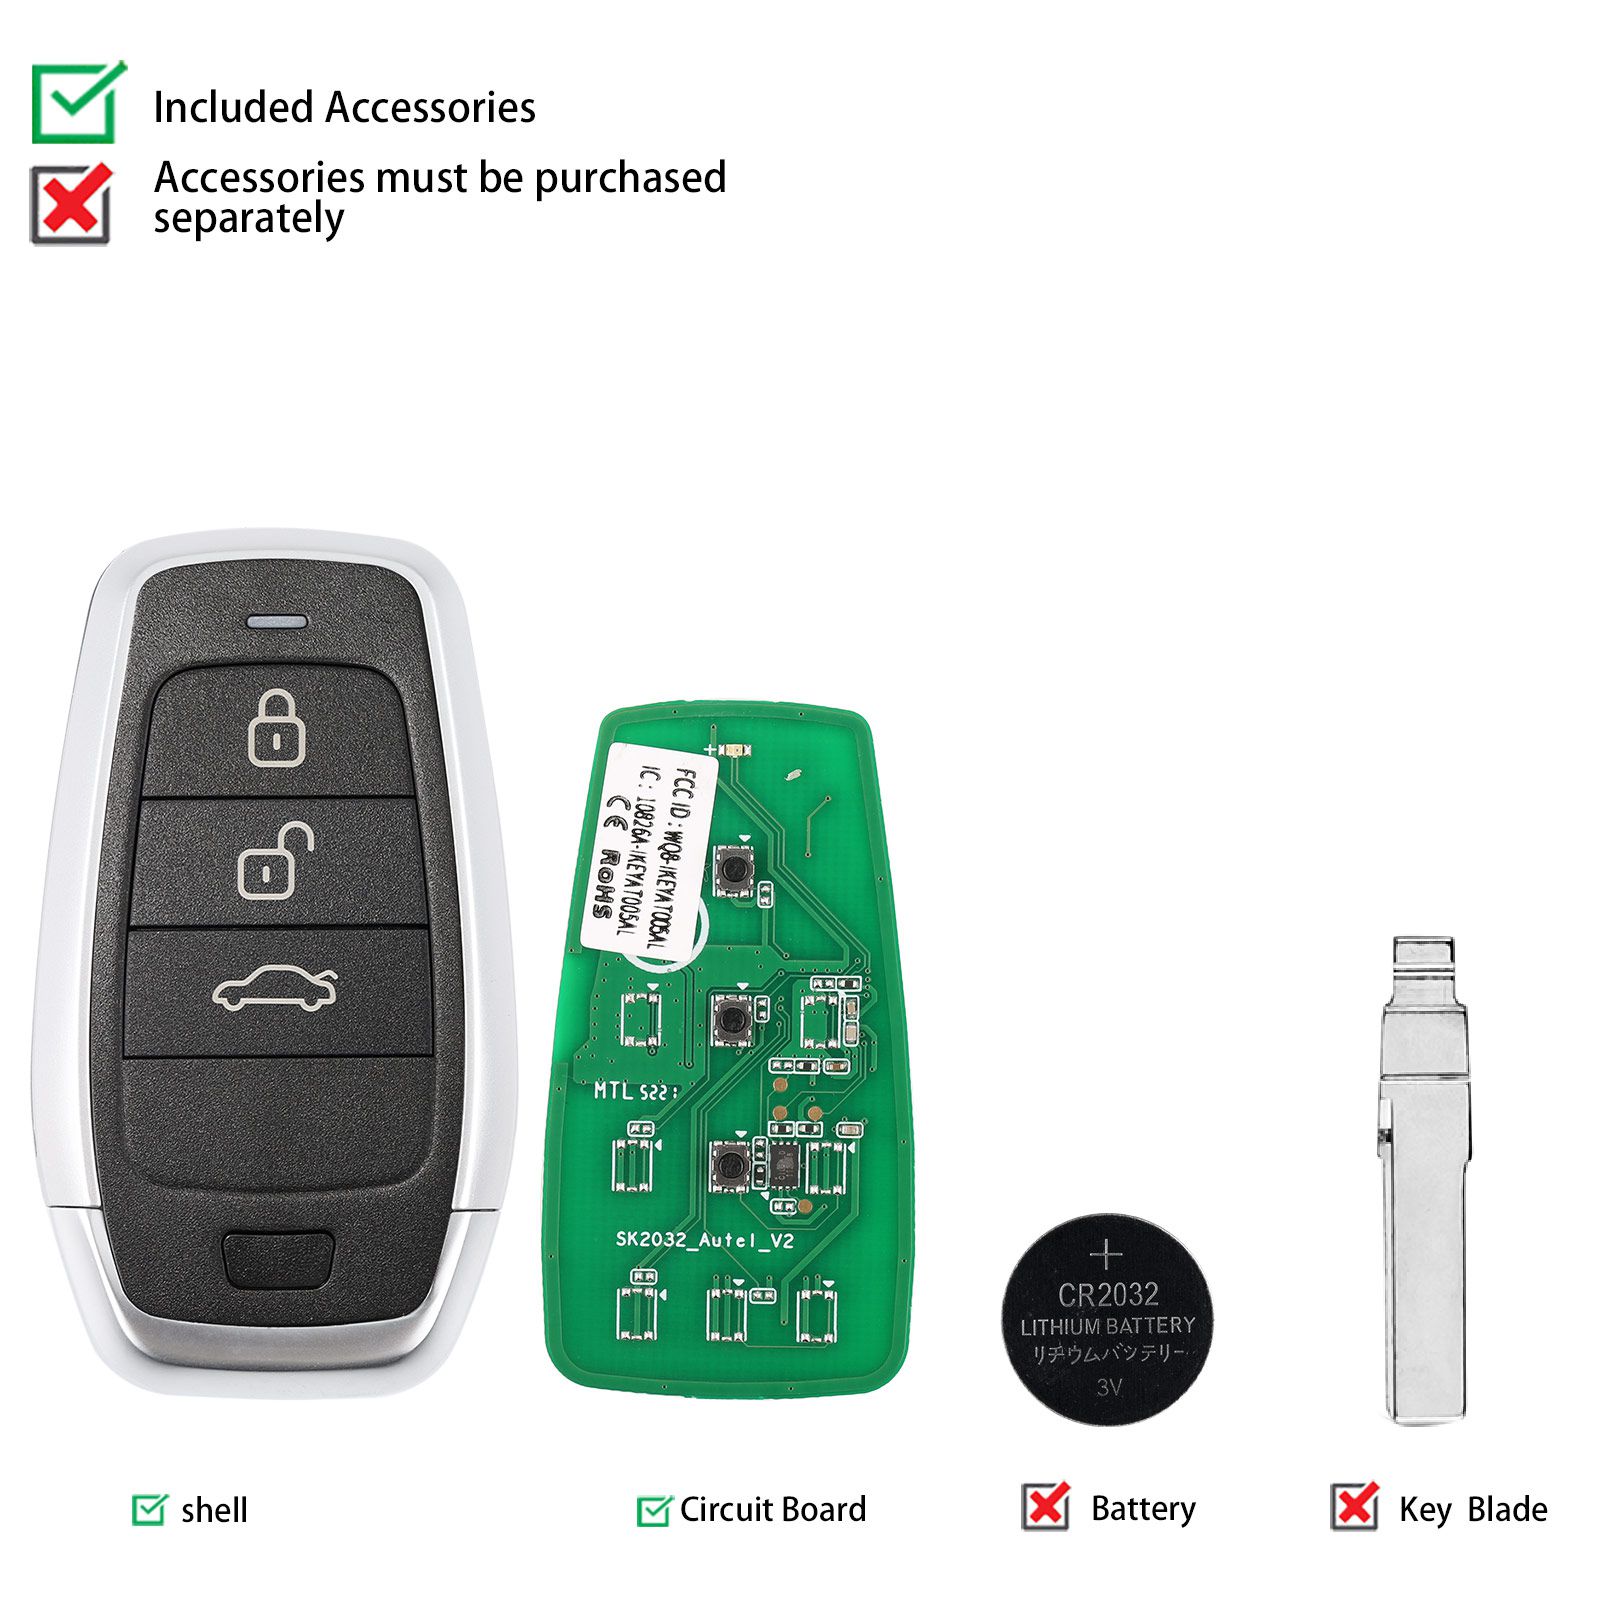 AUTEL IKEYAT003BL 3 Buttons Independent Universal Smart Key 5pcs/lot